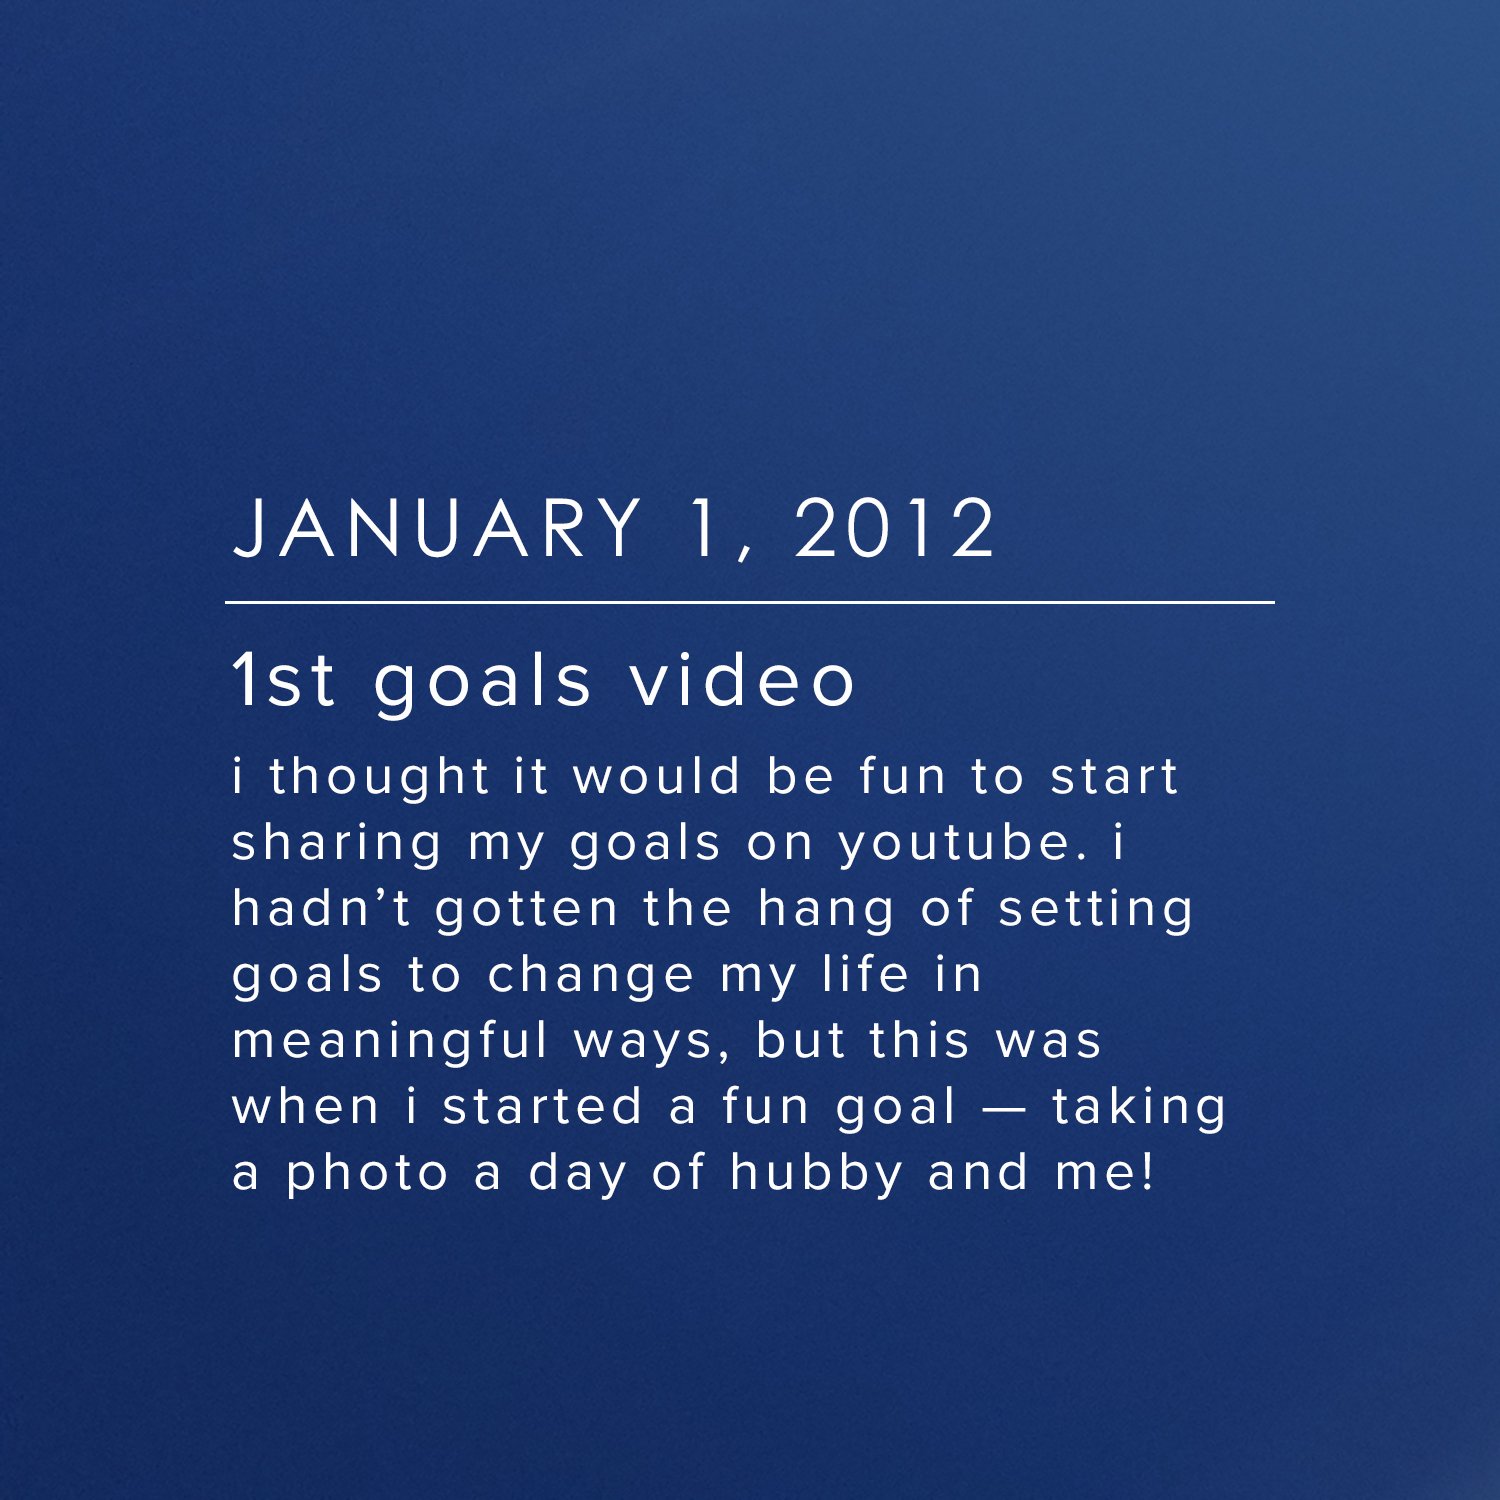 January 1, 2012 - 1st goals video